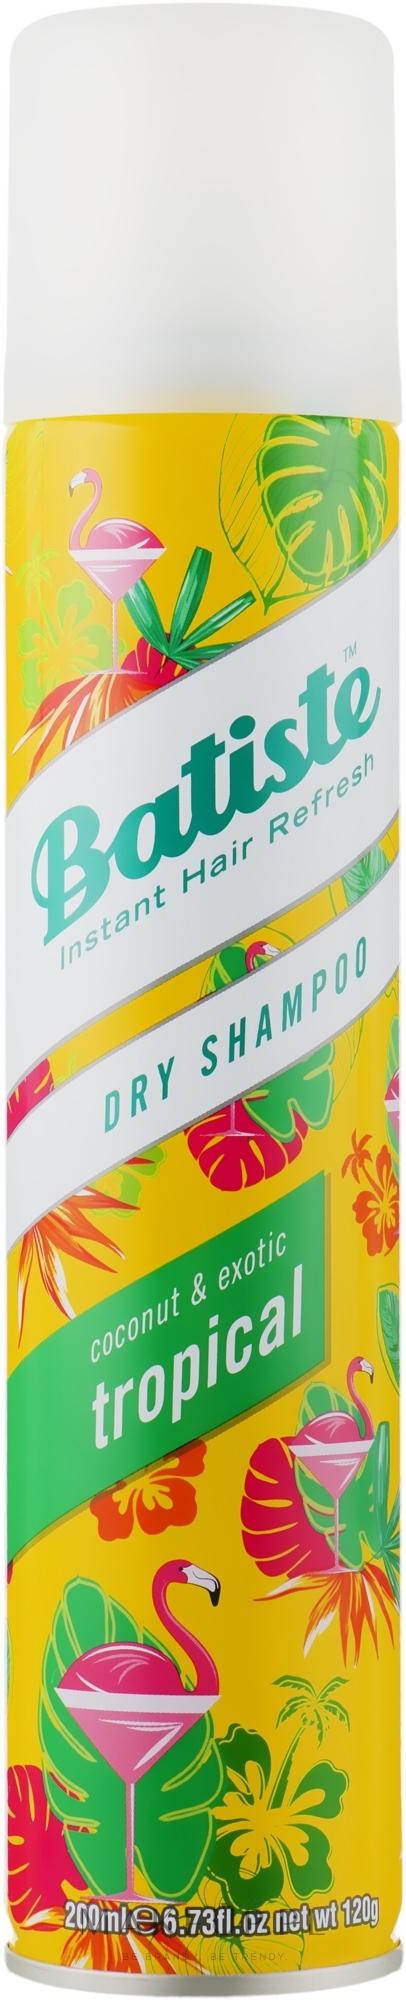 Suchy szampon - Batiste Dry Shampoo Coconut and Exotic Tropical — Zdjęcie 200 ml